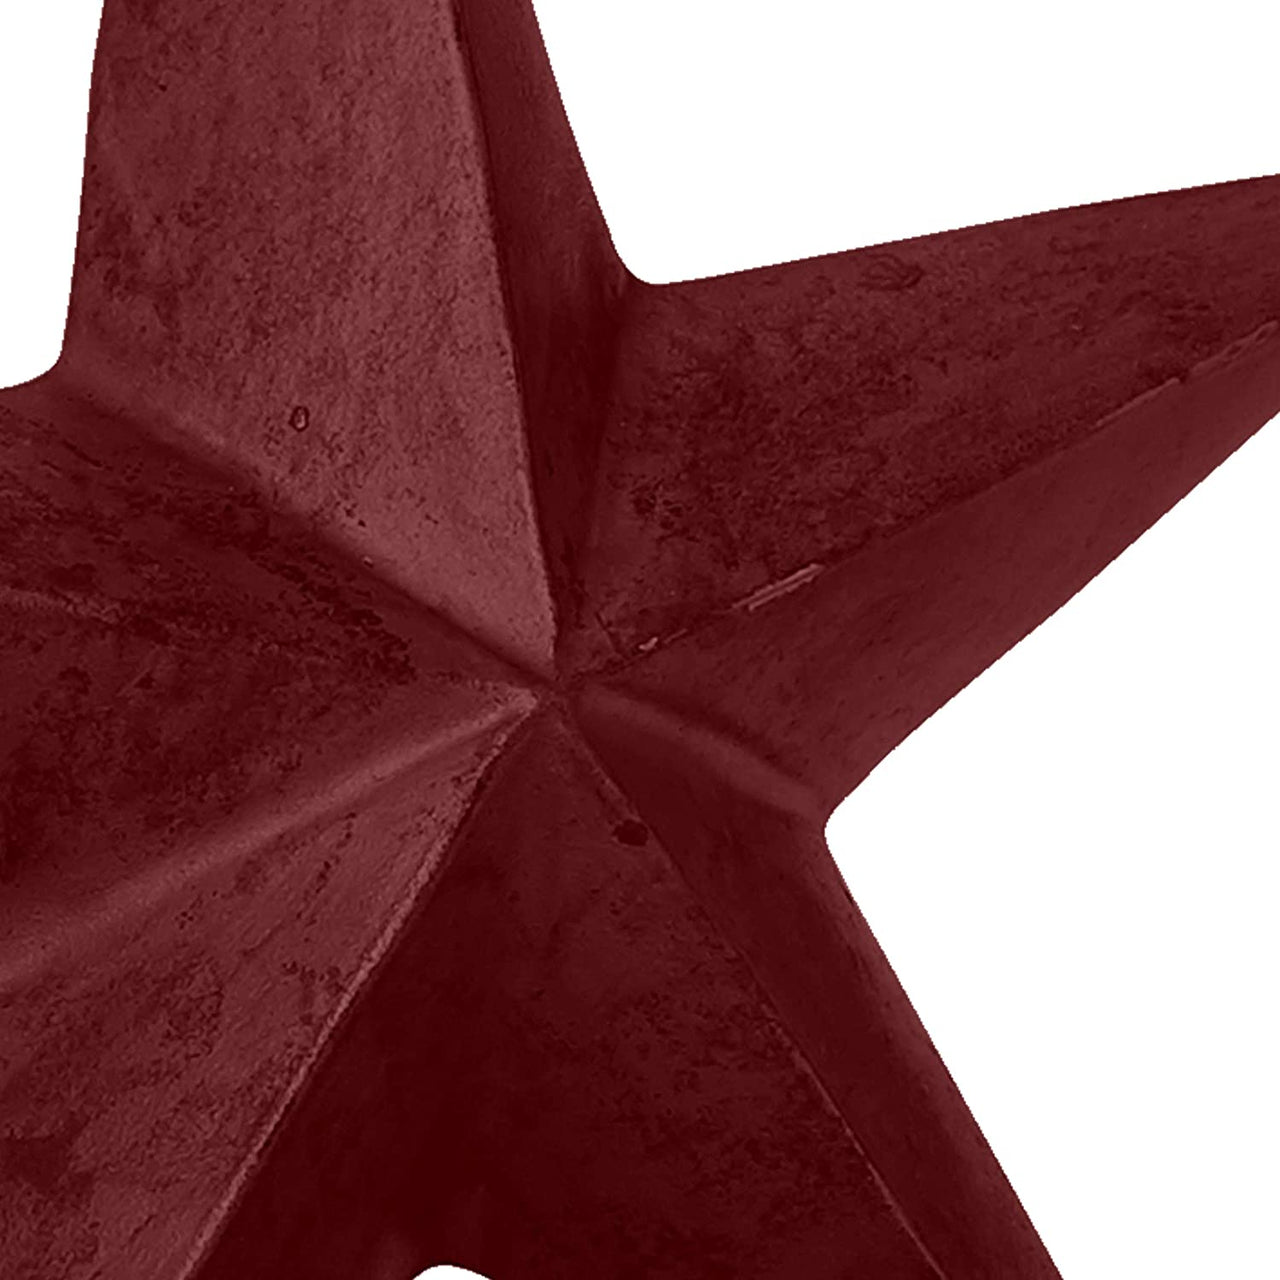 Star Stocking Hanger - Red Finish Set of 2 Park Designs